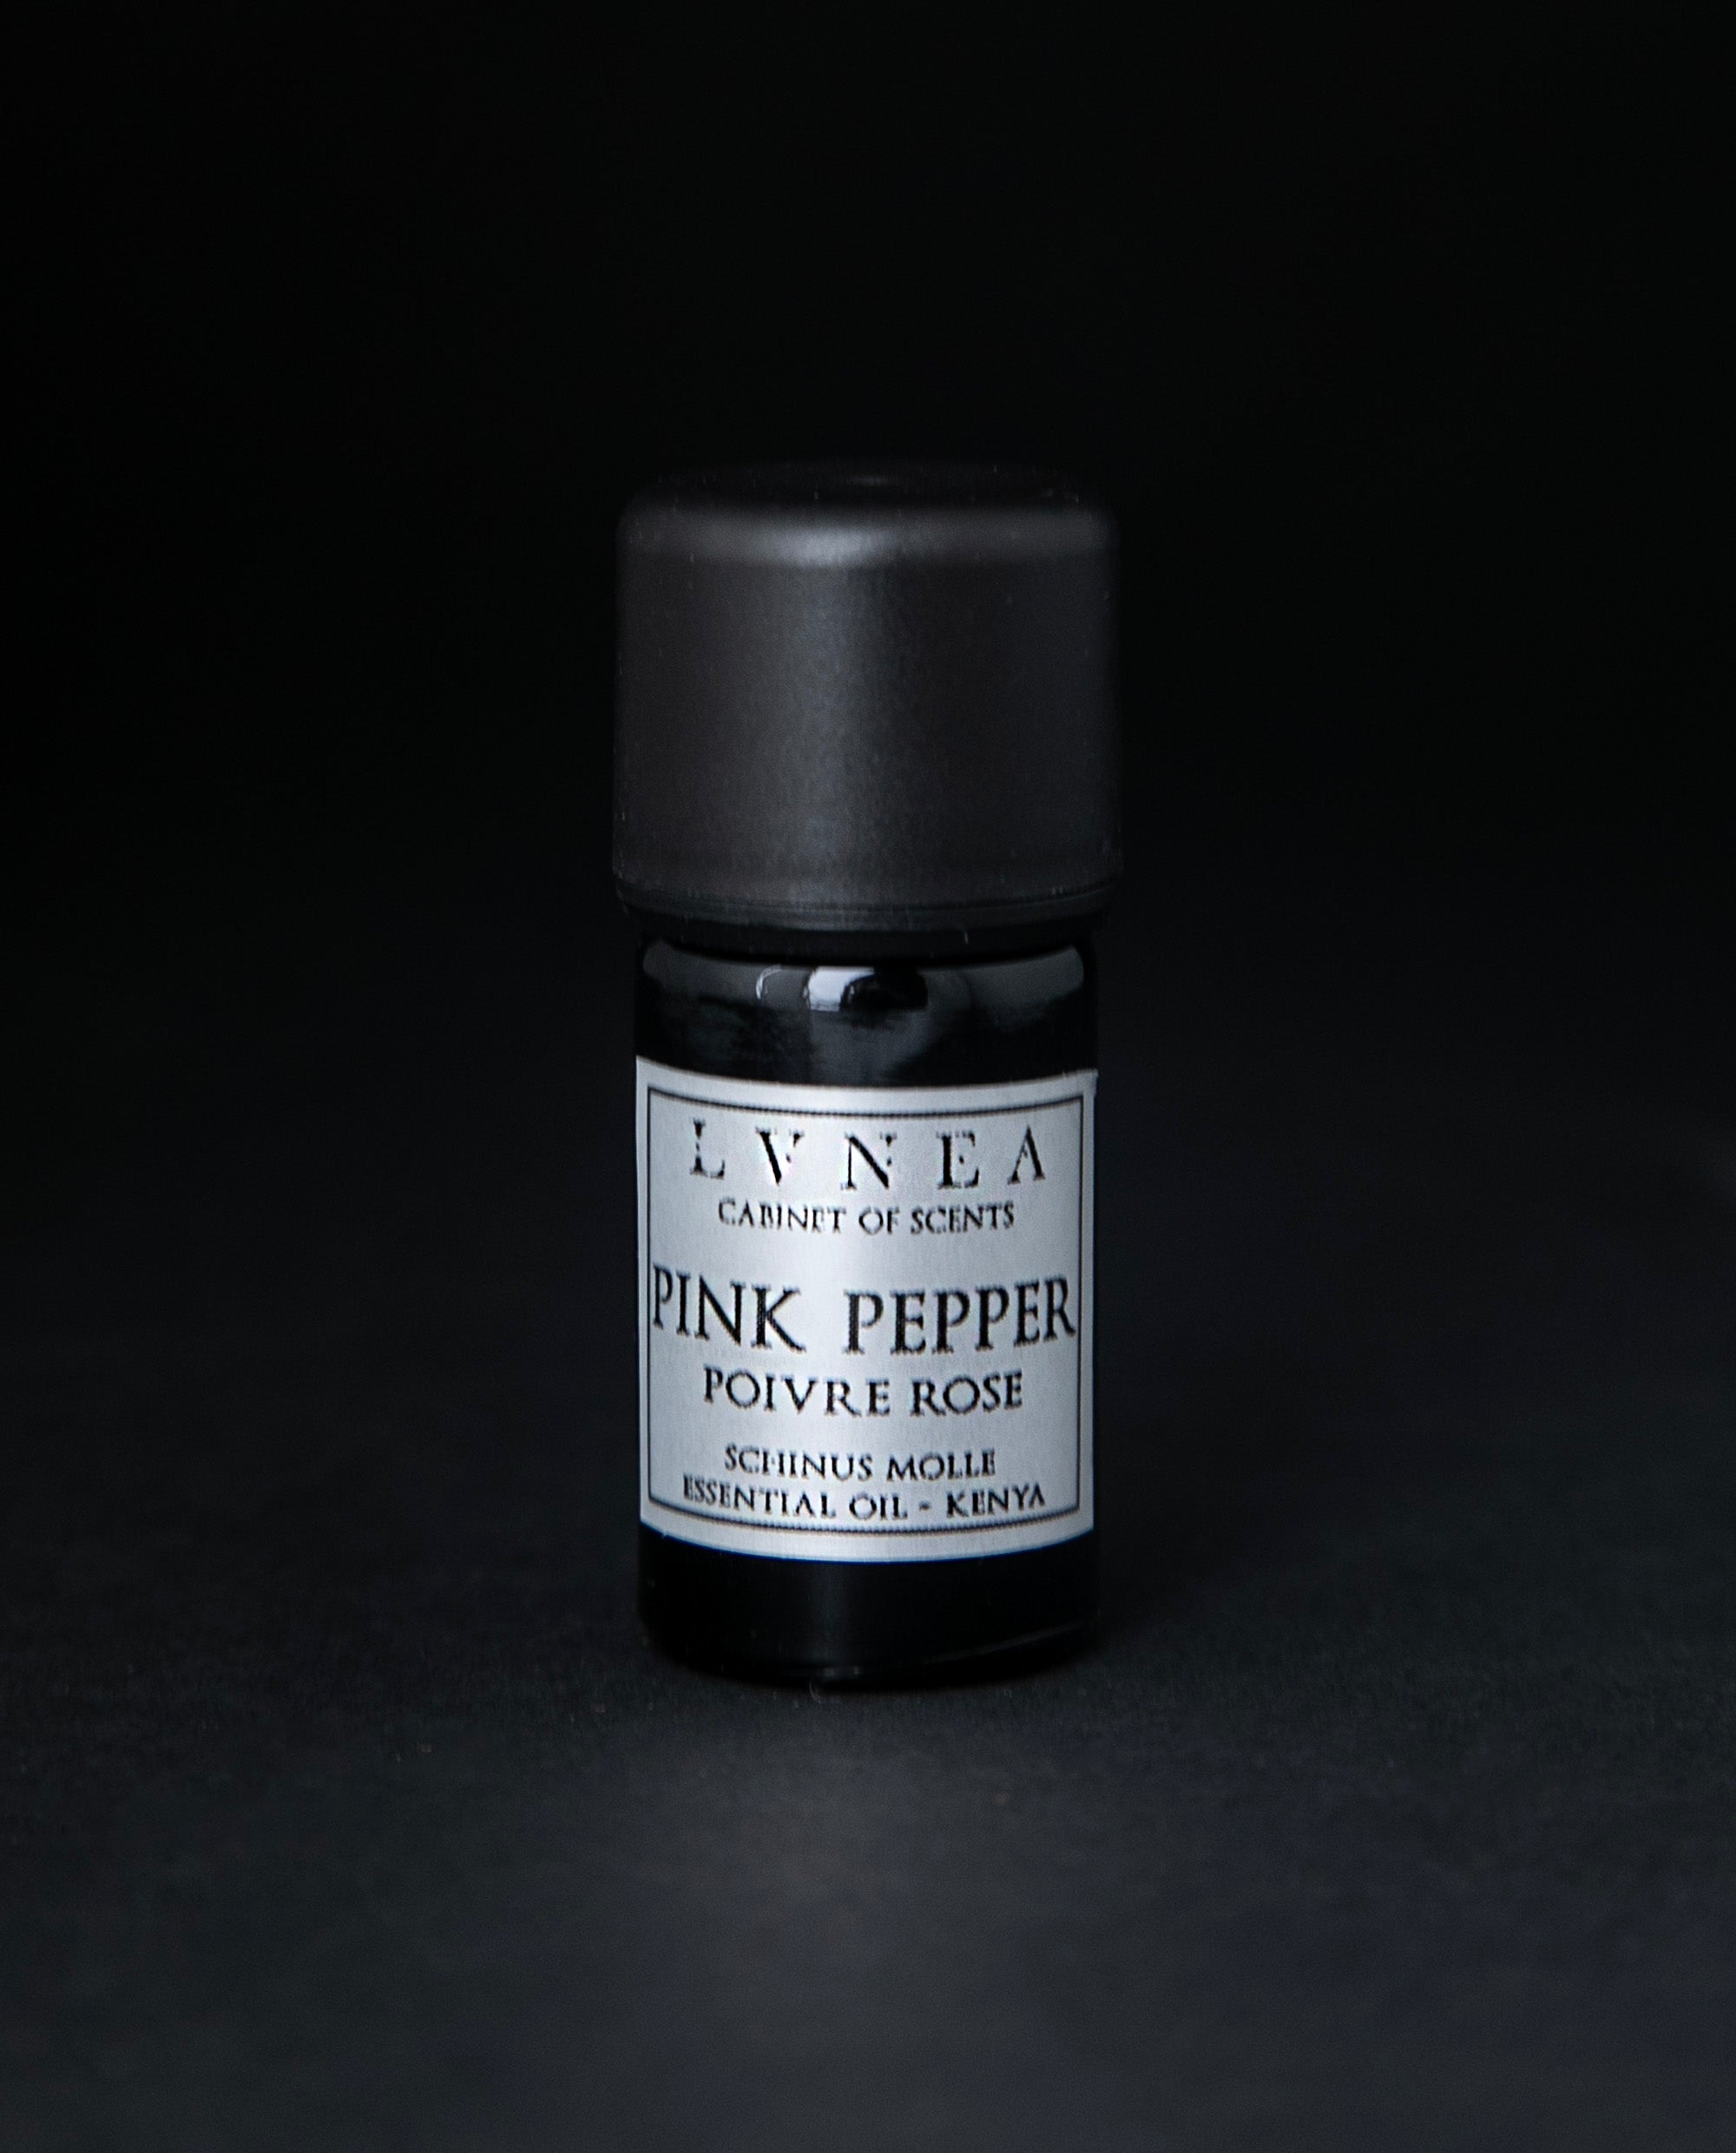 The Premium Nature Pink Pepper Essential Oil - Crisp, Peppery